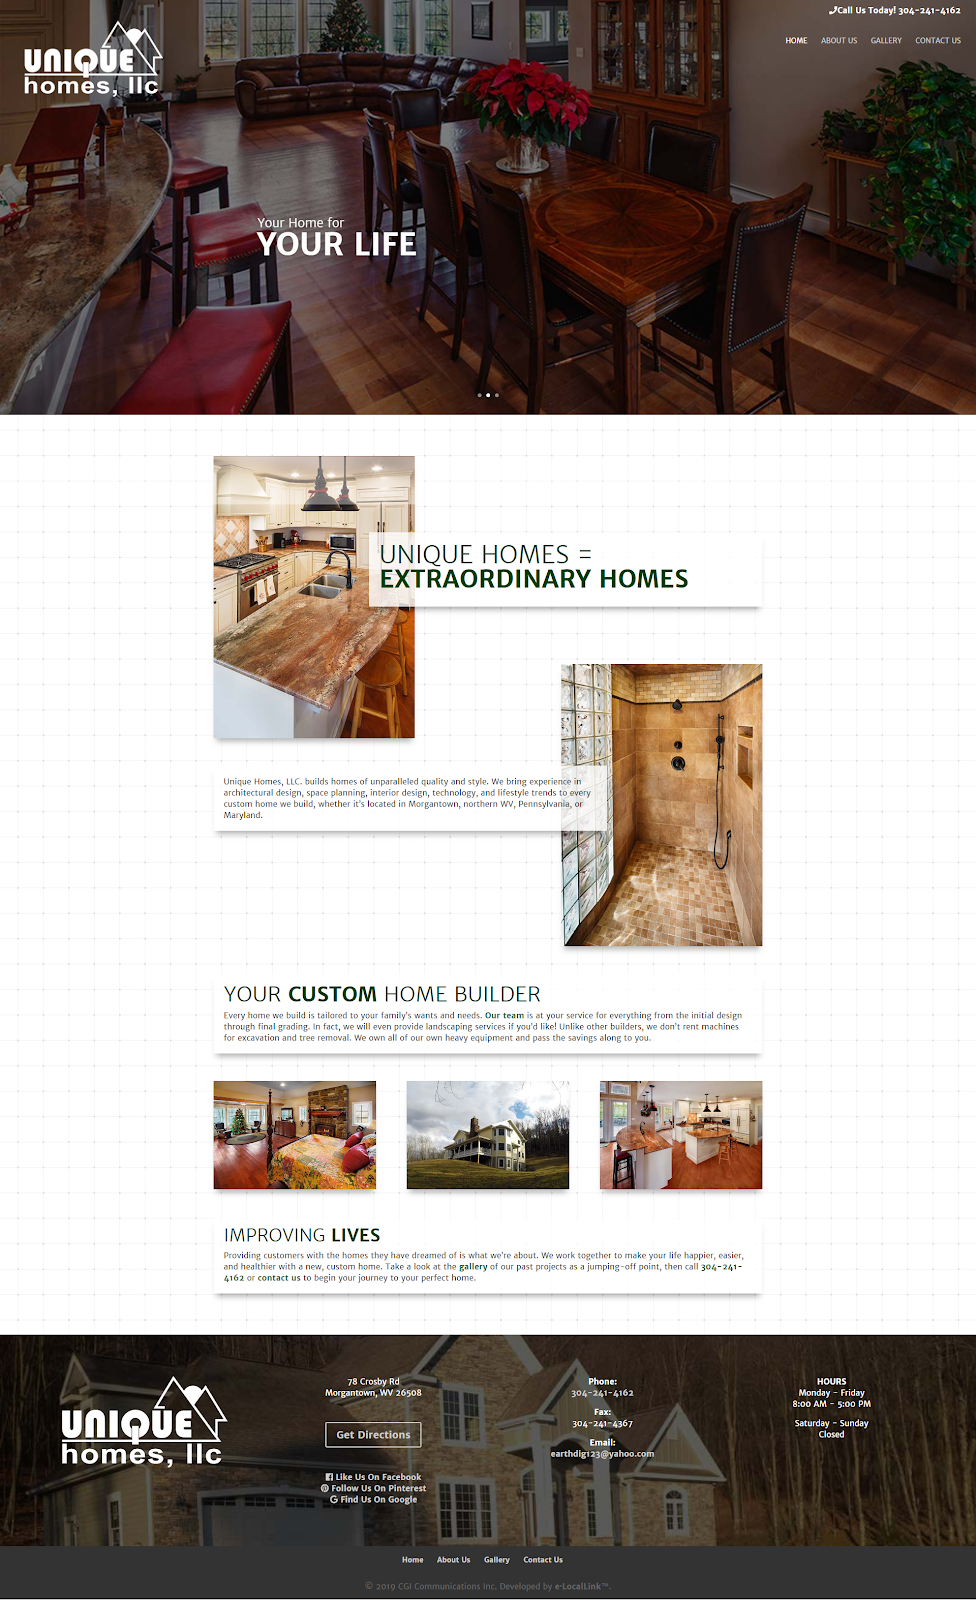 unique homes, llc website home page screenshot